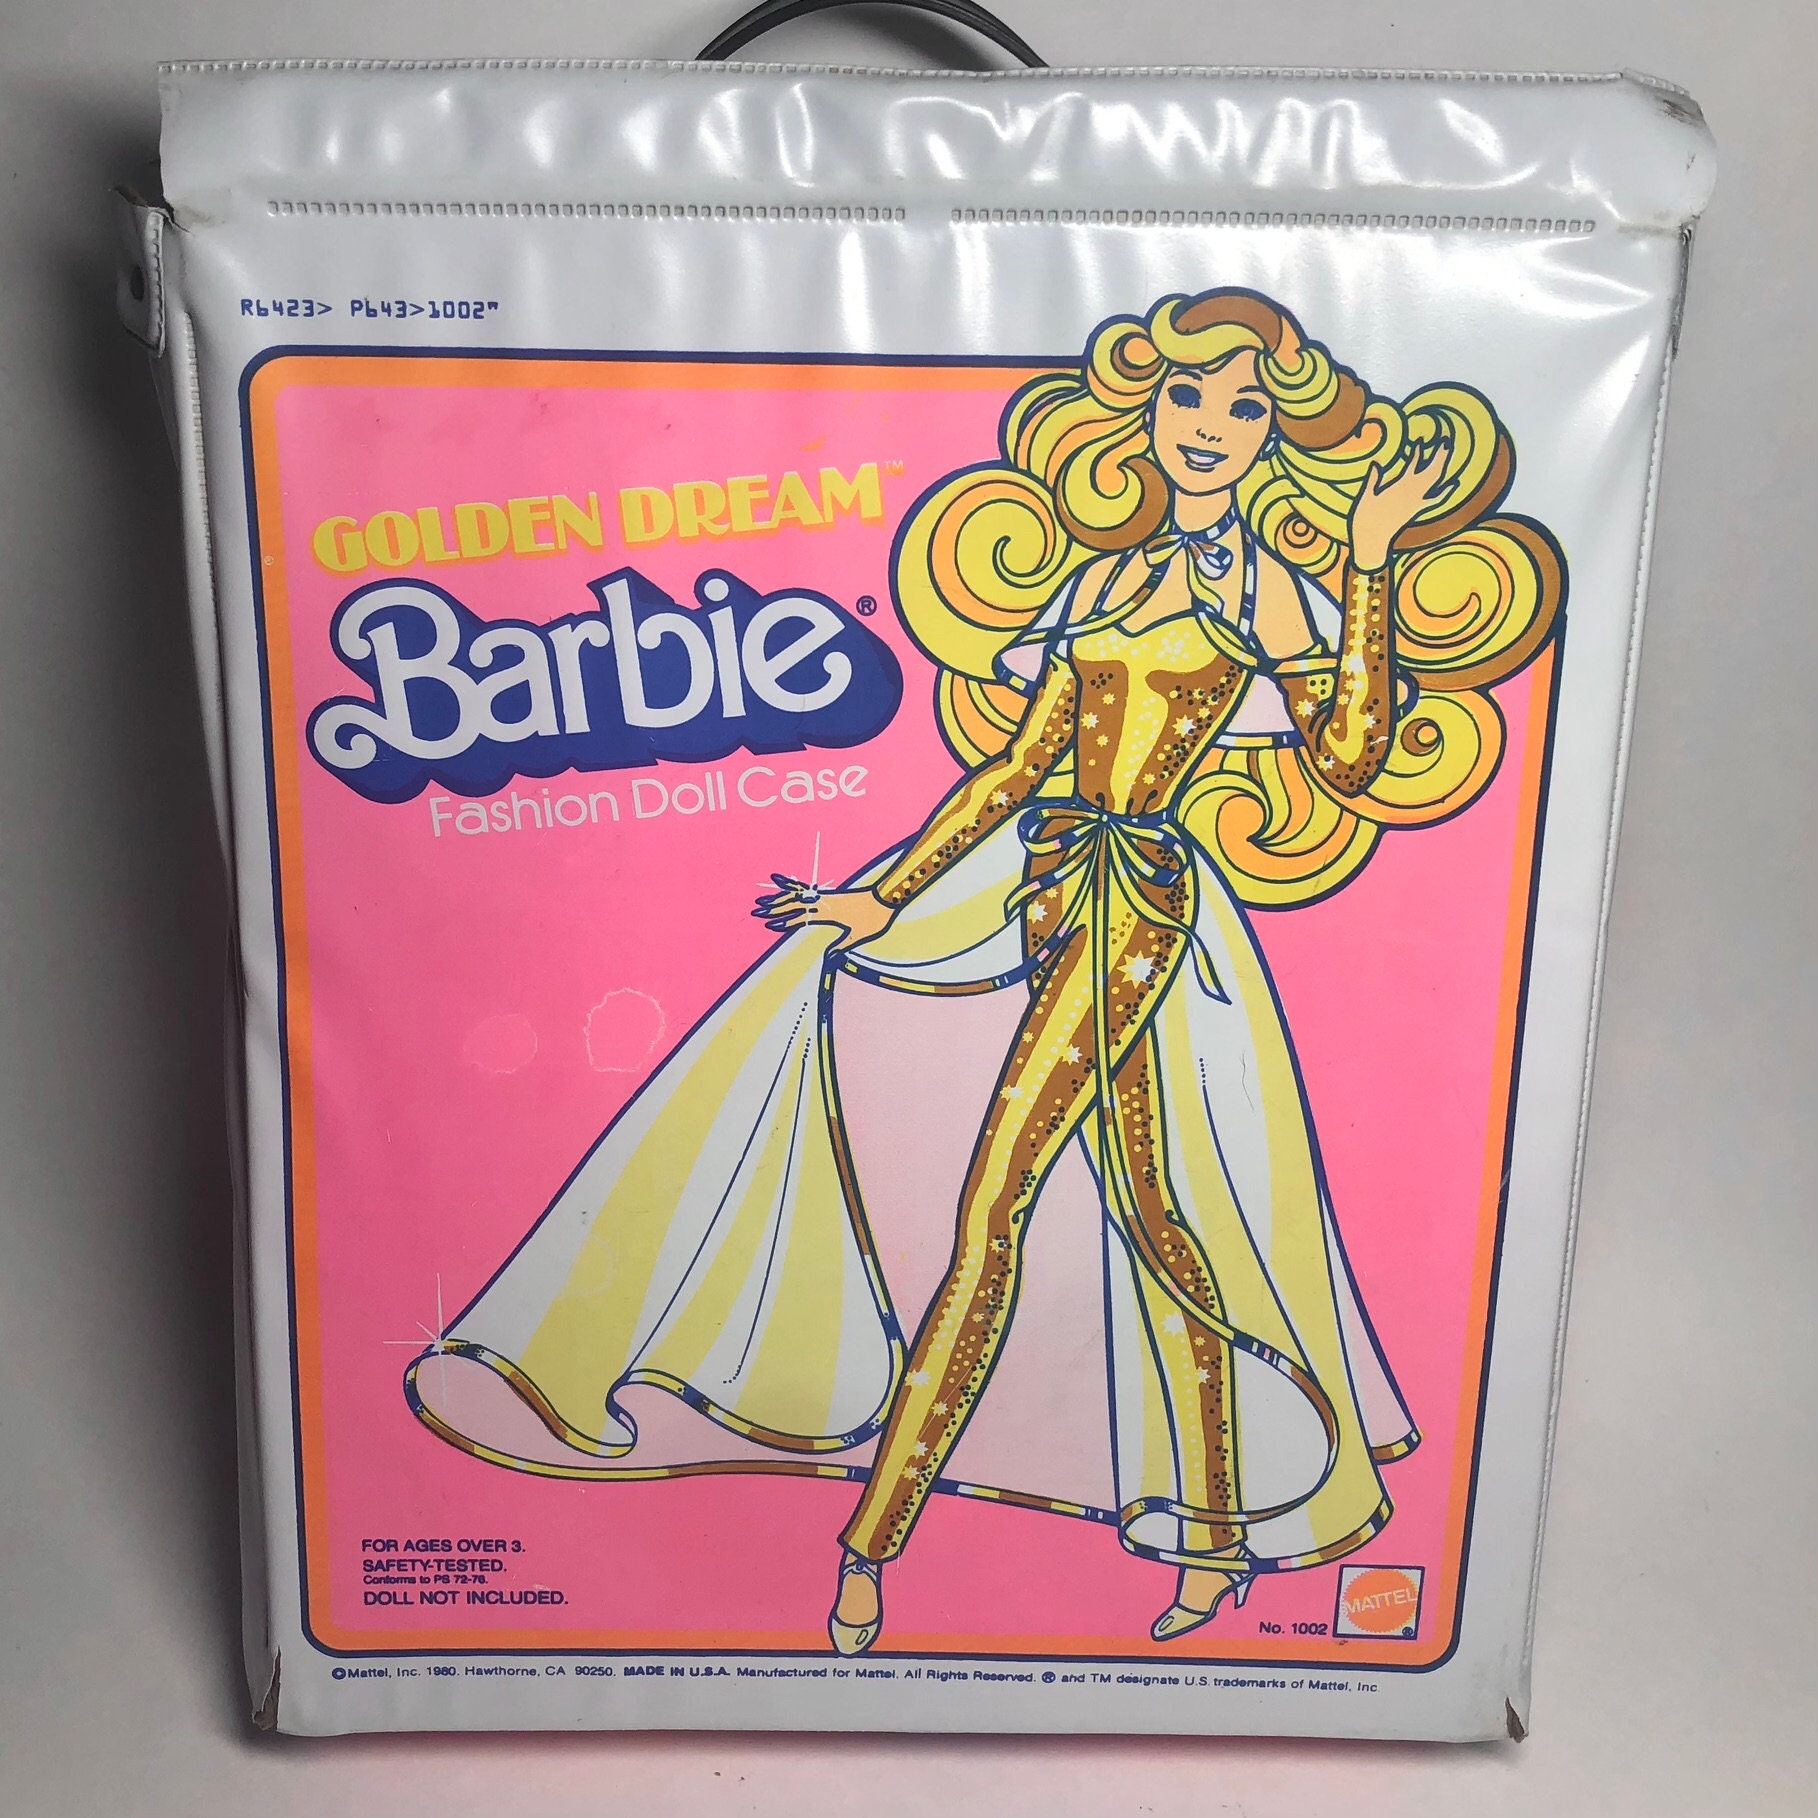 Barbie Case Golden Dream Fashion Doll Trunk Carrying Case #1004 Mattel  Vintage